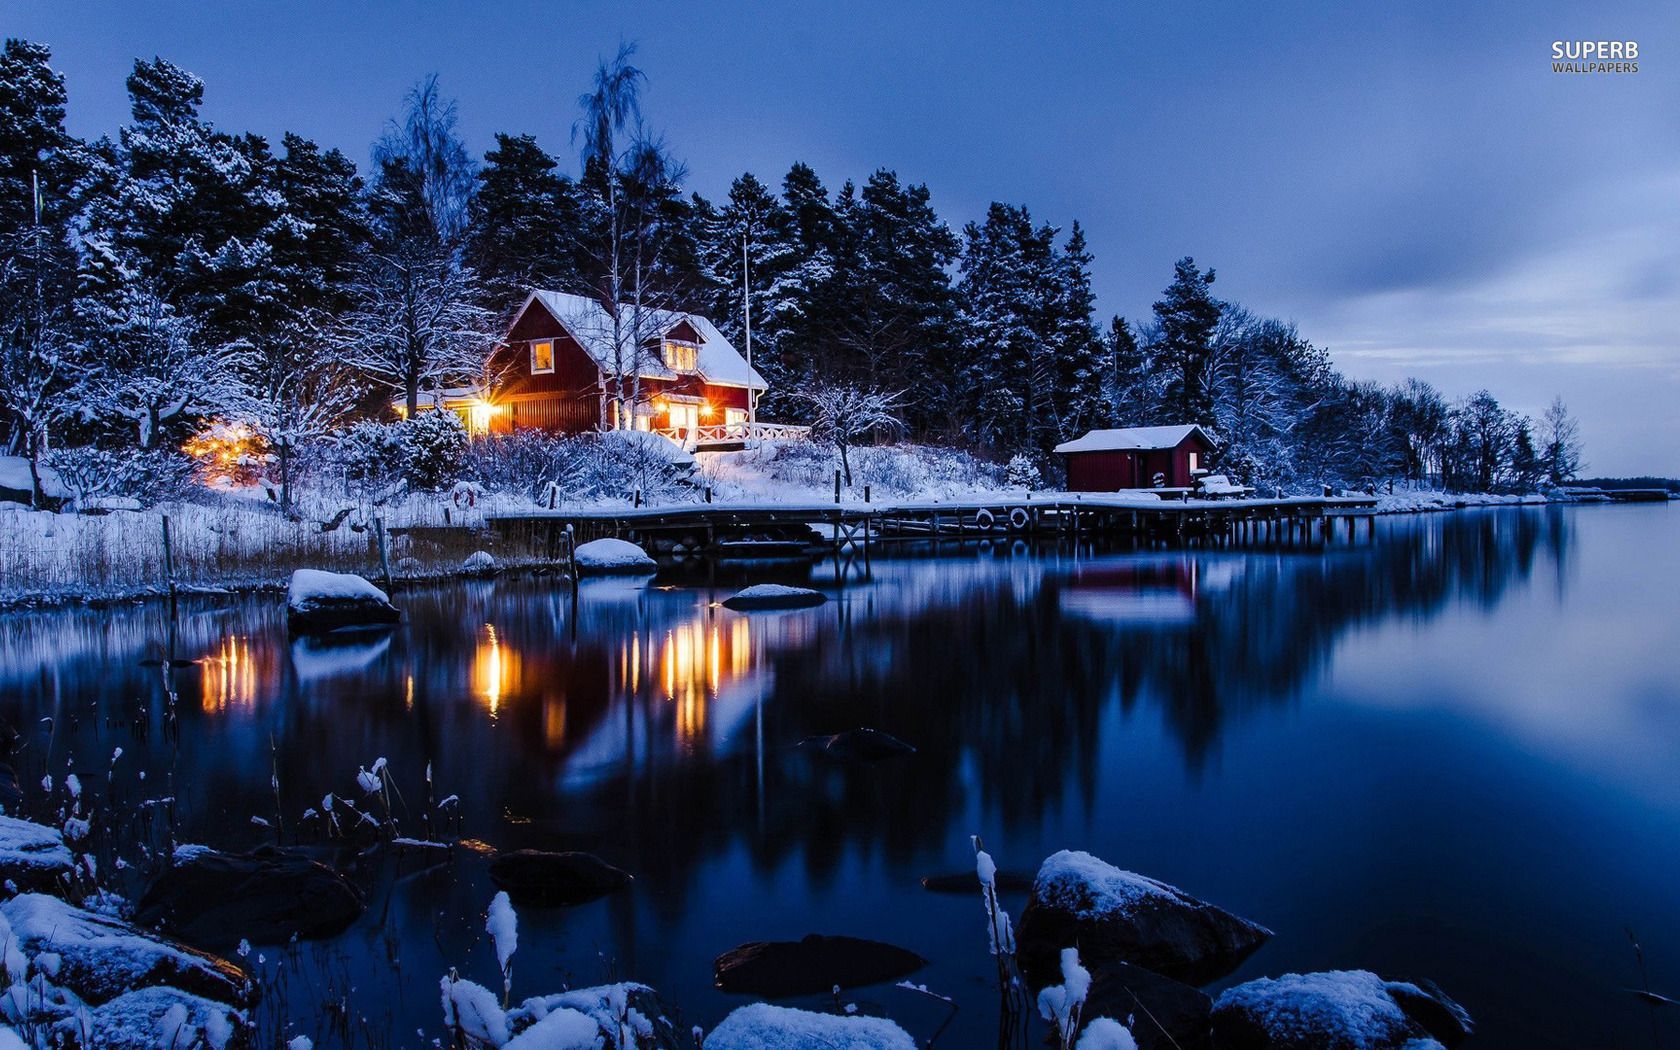 Lakeside winter cabin wallpaper. Winter cabin, Winter image, Winter wallpaper hd